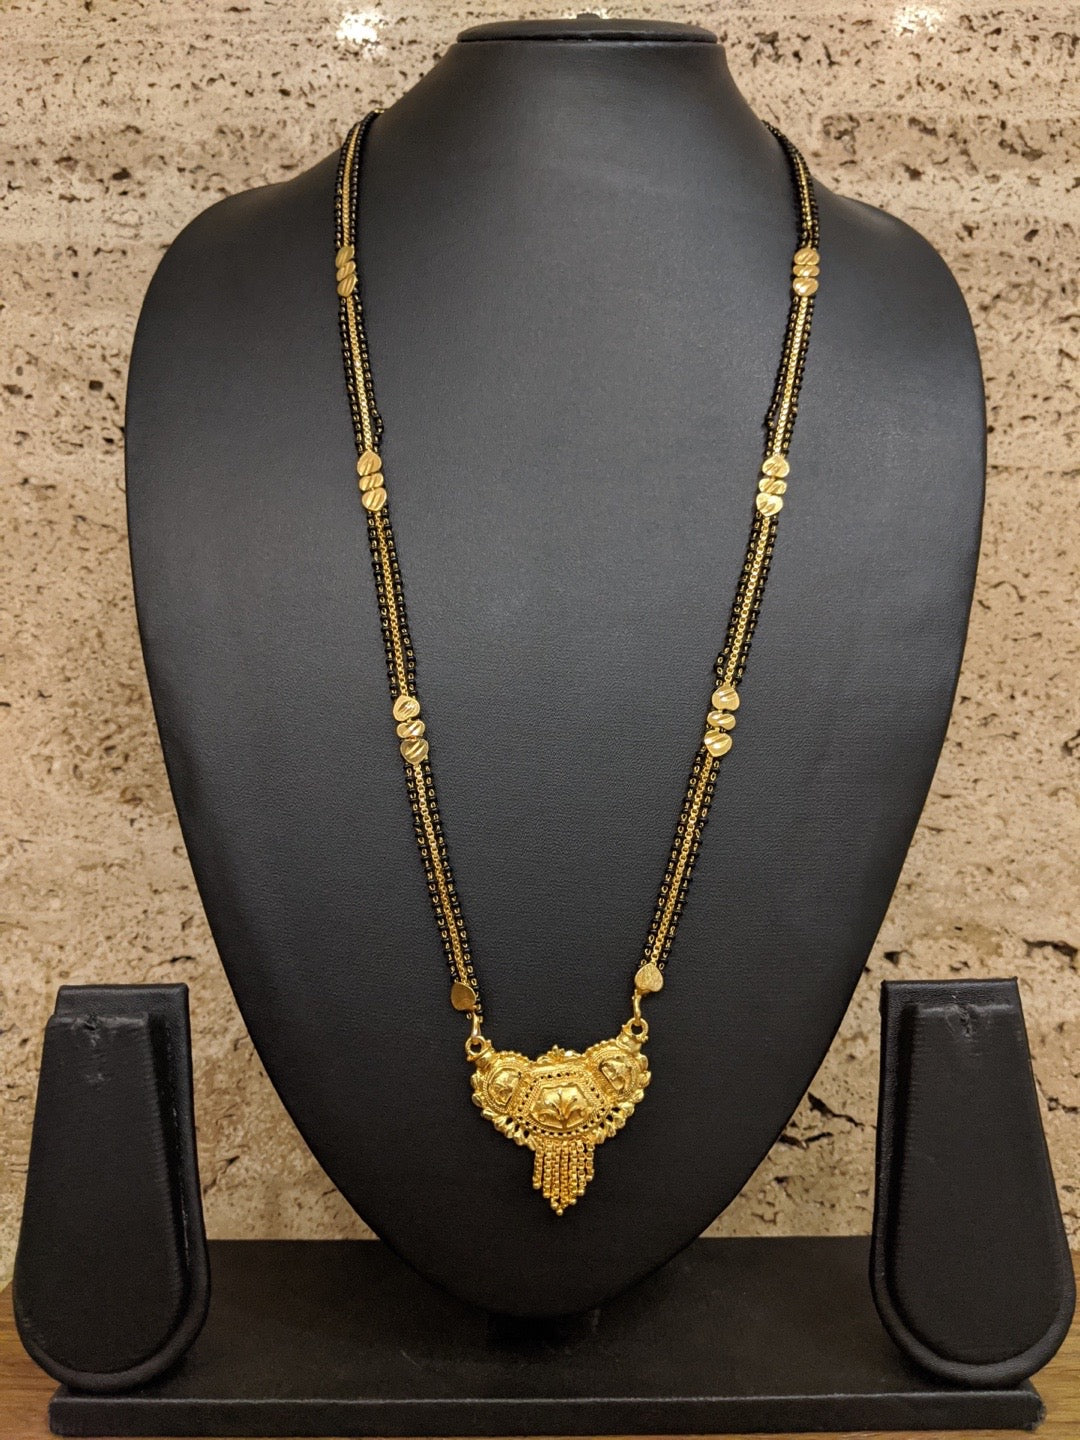 image for Maharashtrian Long Mangalsutra Designs Gold Pendant Multi Strand Black Beads Chain